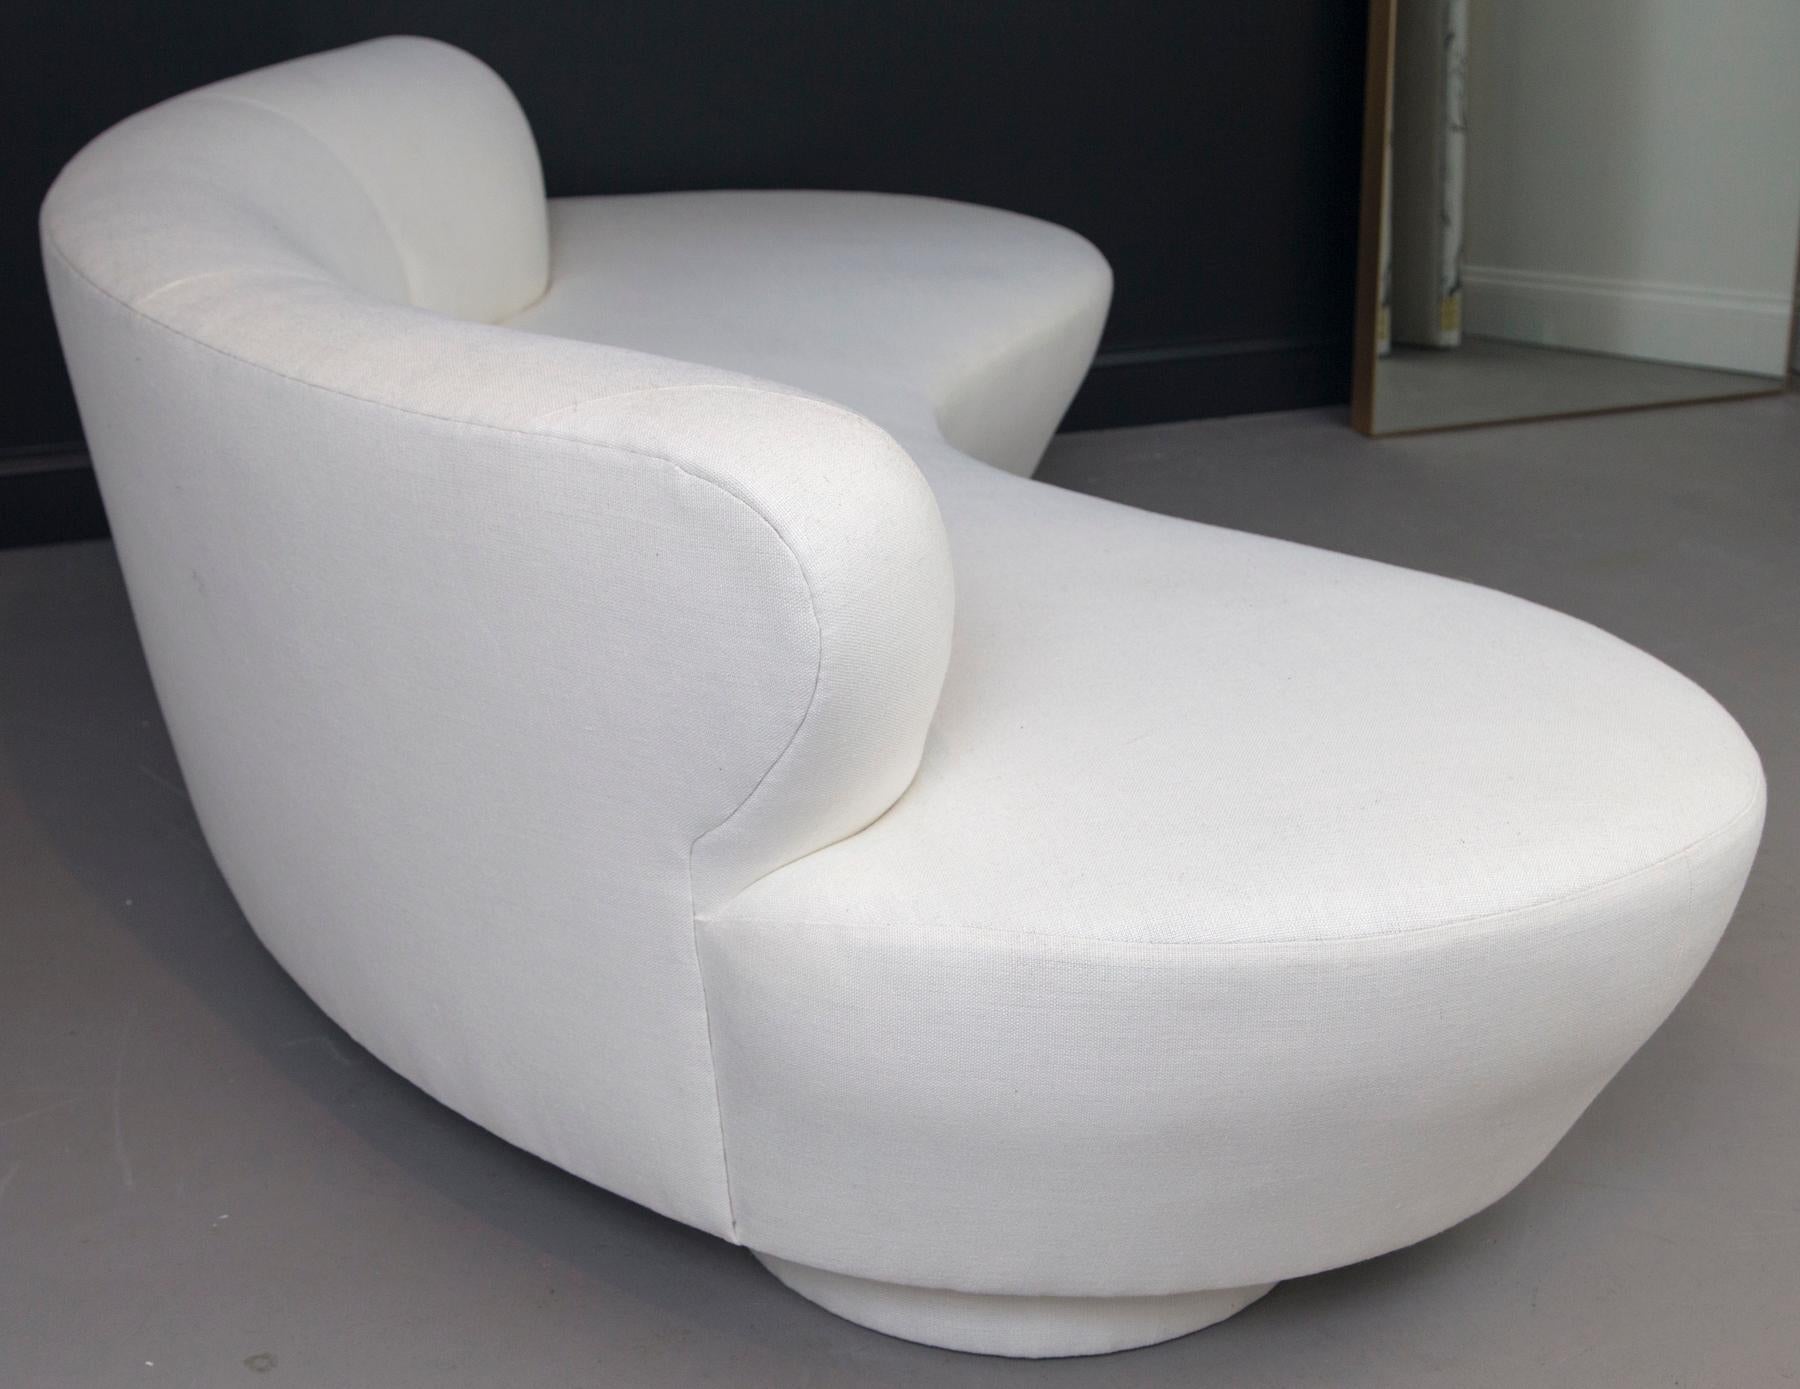 German Vladimir Kagan Sofa Reupholstered in White Belgian Linen, Lucite Bracket Support